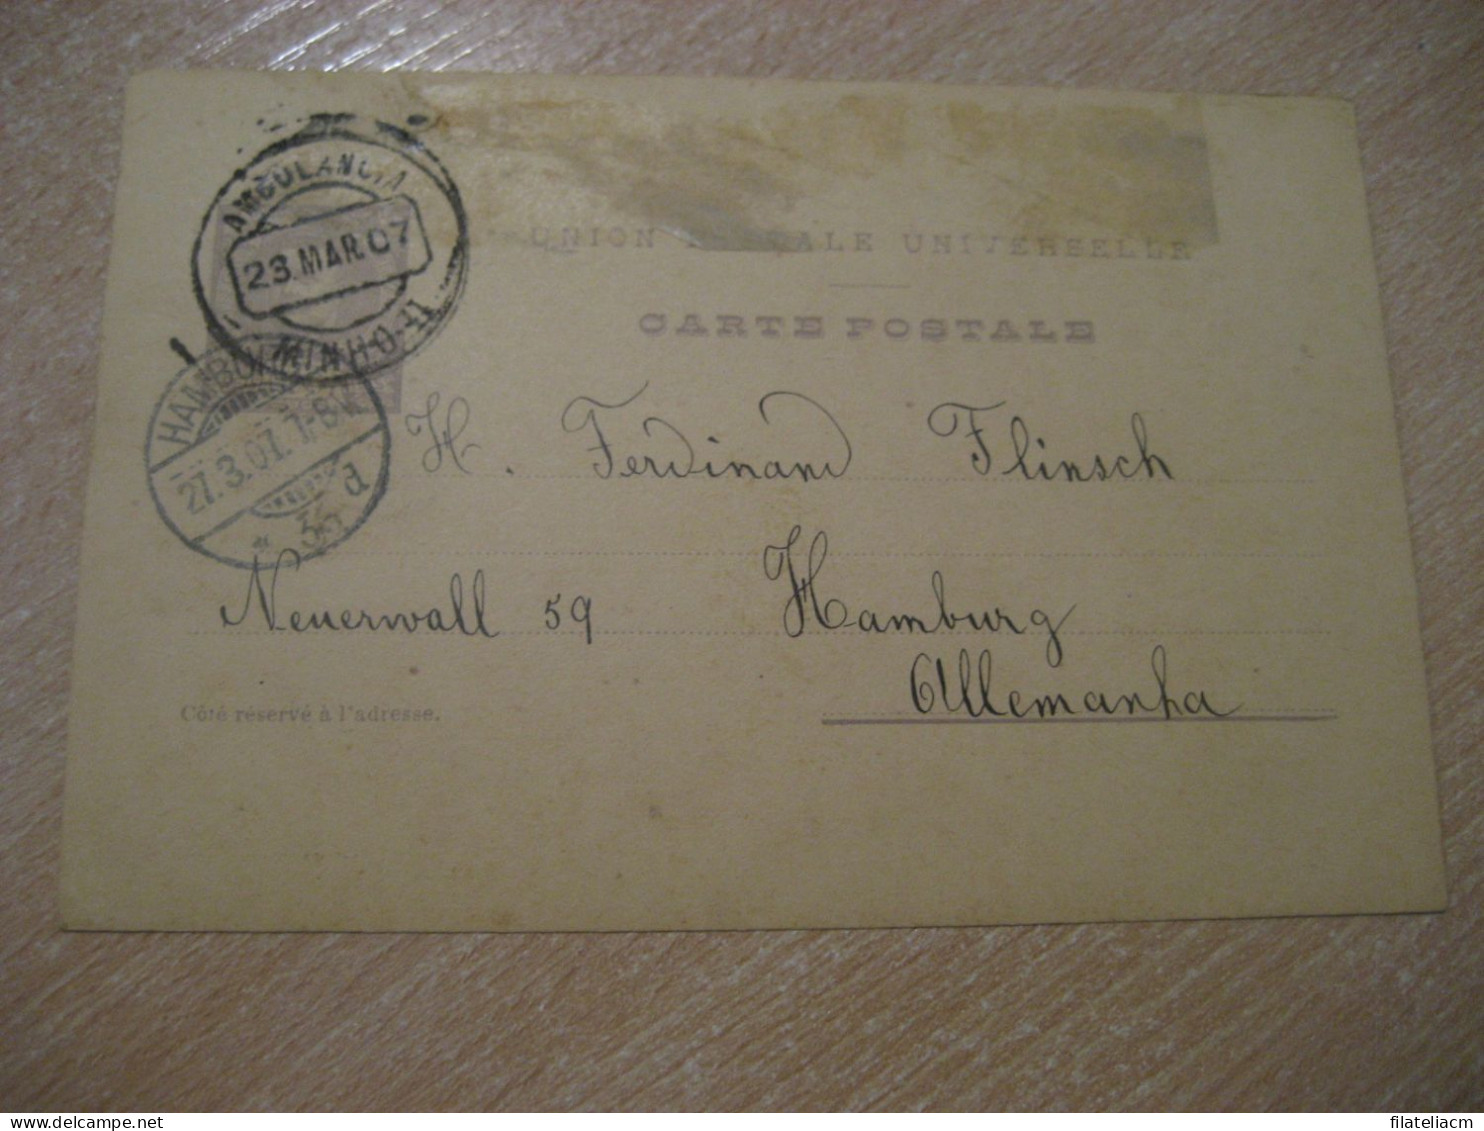 AMBULANCIA MINHO II Braga Porto 1907 To Hamburg Germany Cancel UPU Faults Carte Postale Postal Stationery Card PORTUGAL - Lettres & Documents